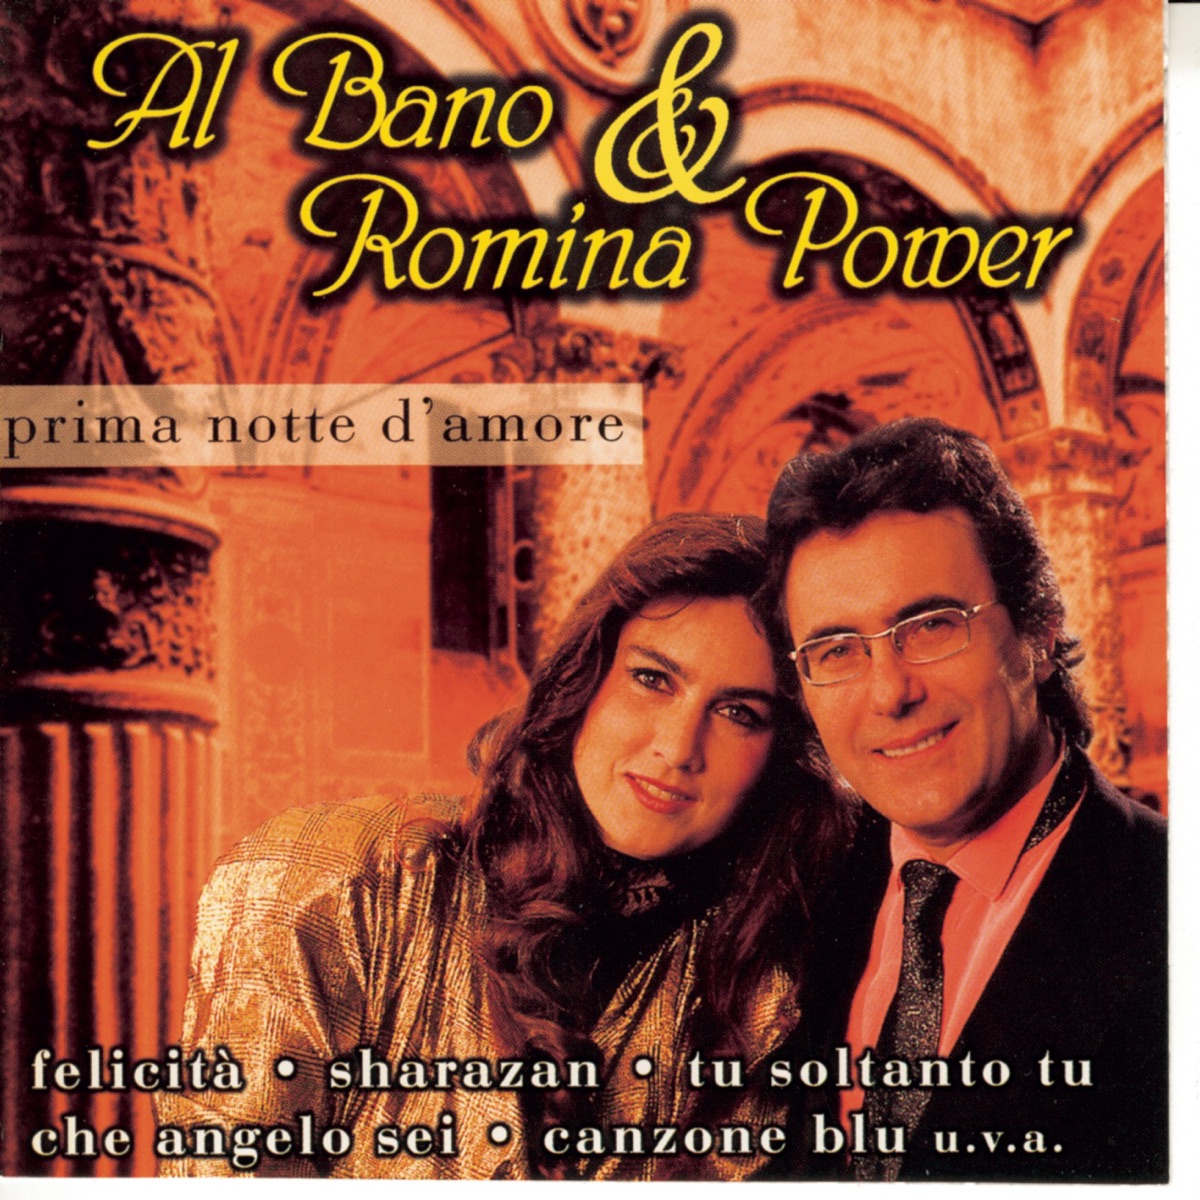 Prima notte d'amore - Album by Al Bano & Romina Power - Apple Music